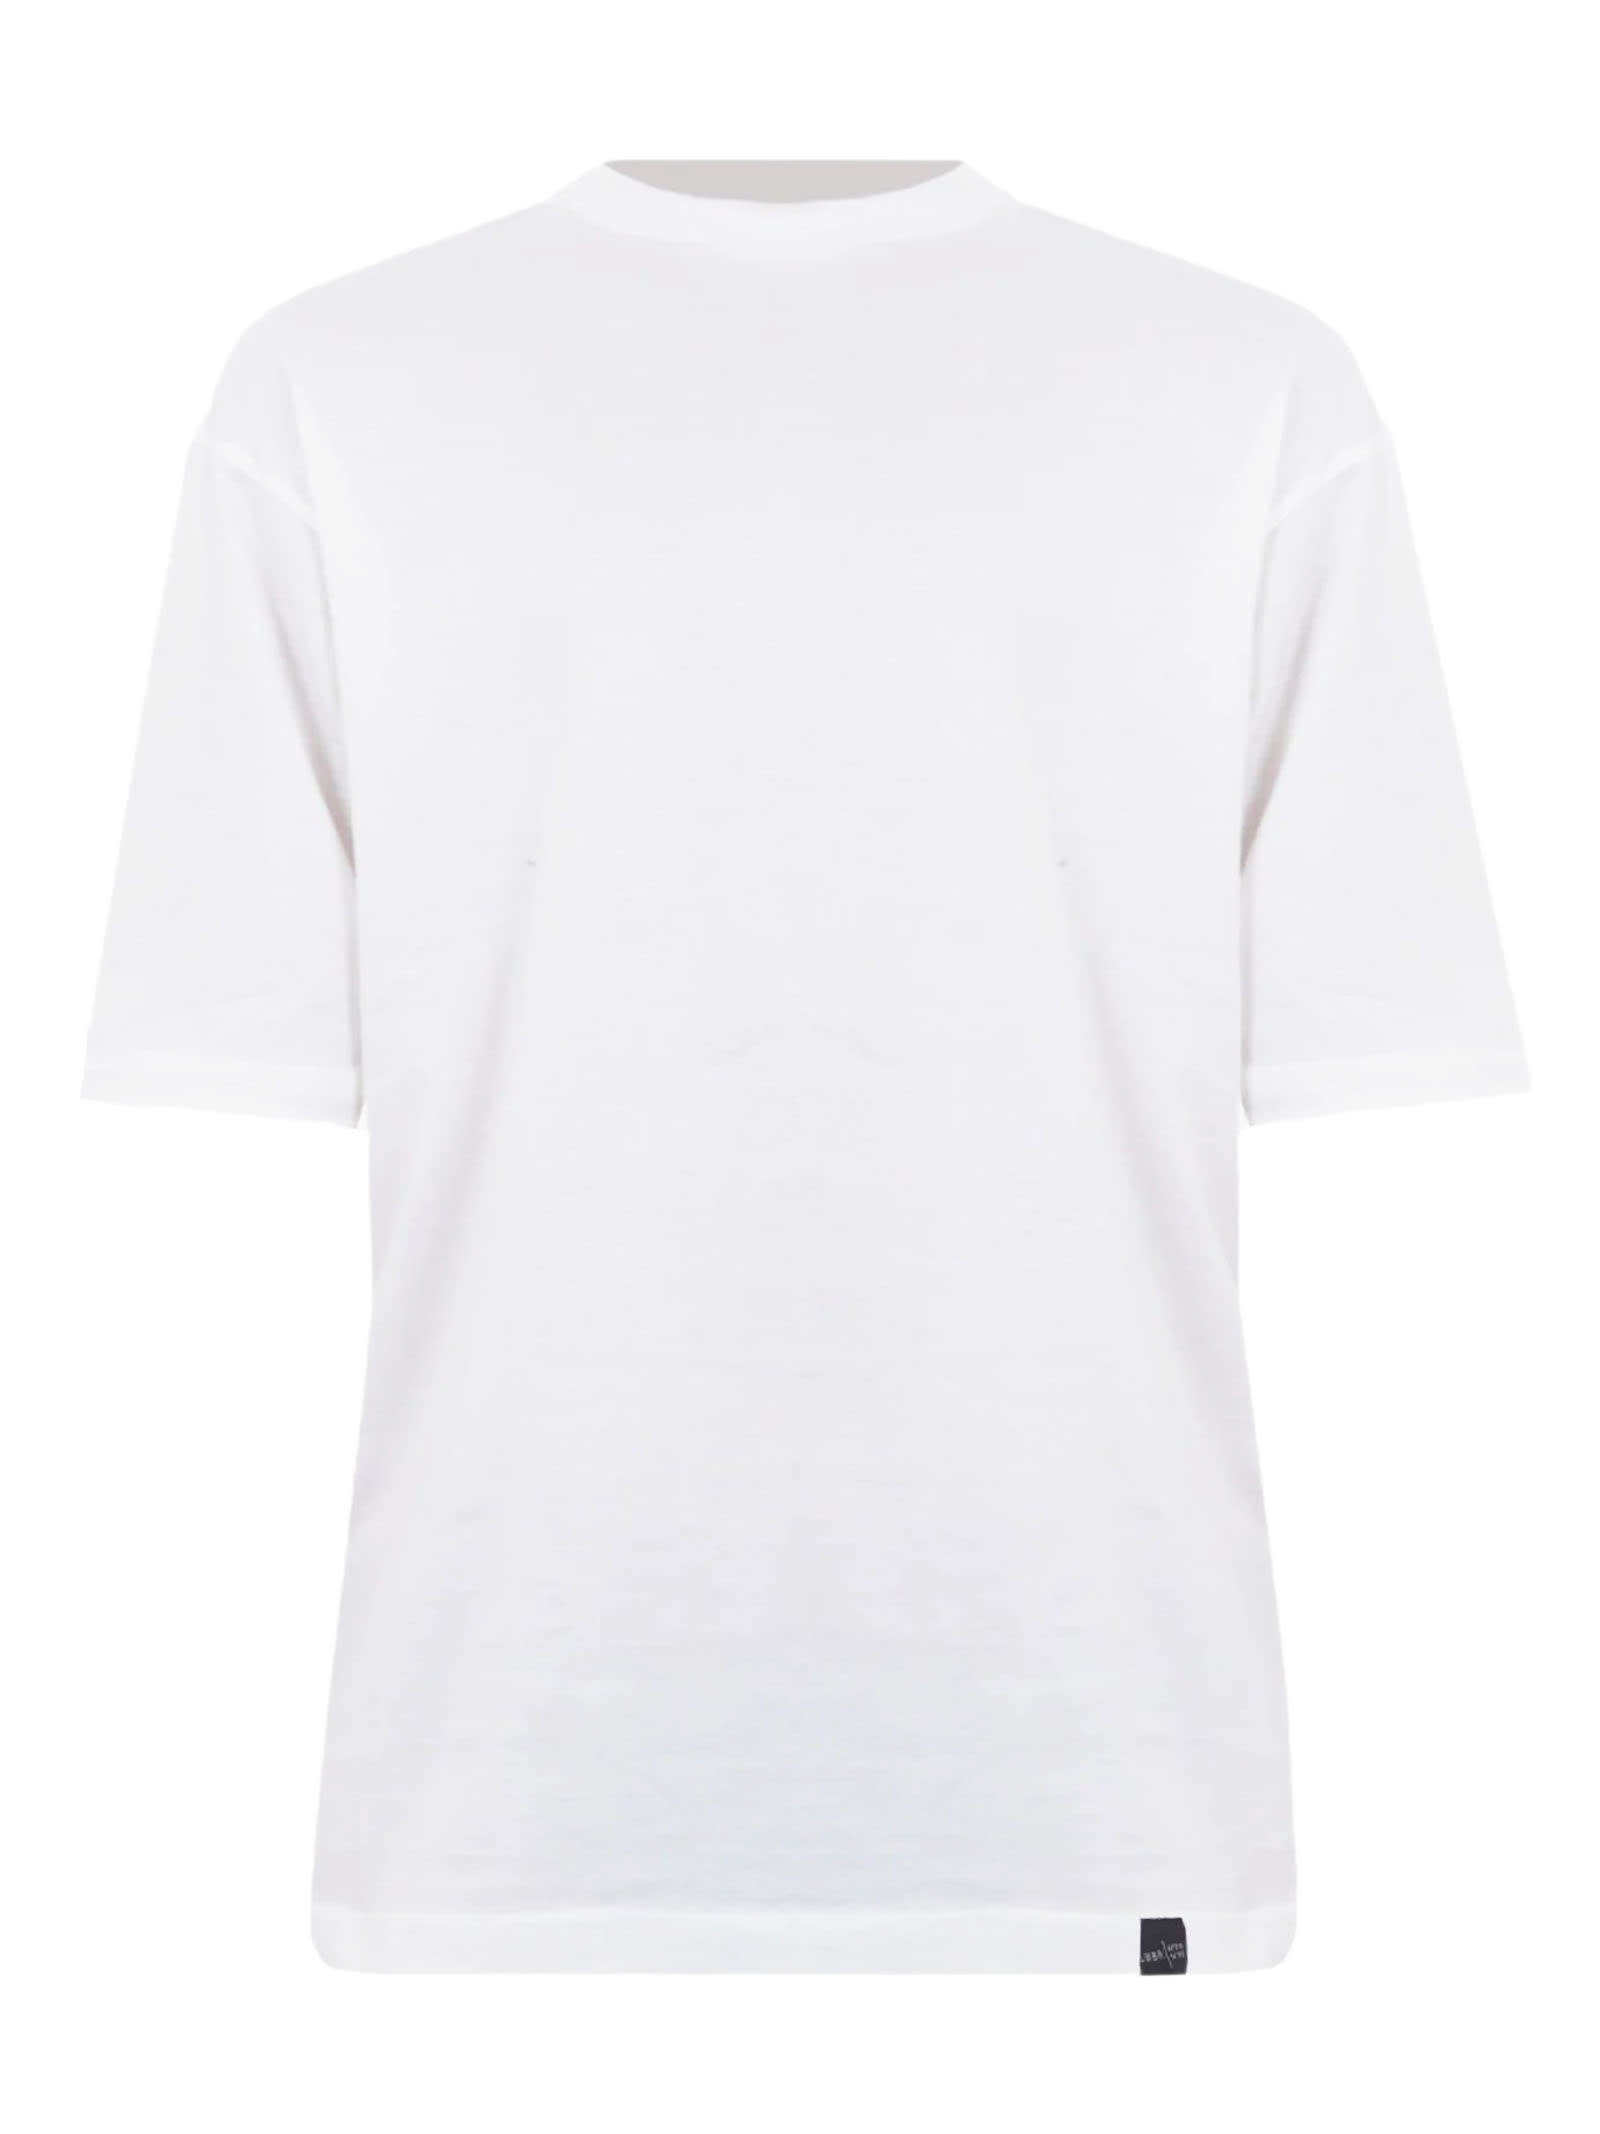 Shop Low Brand White Cotton T-shirt